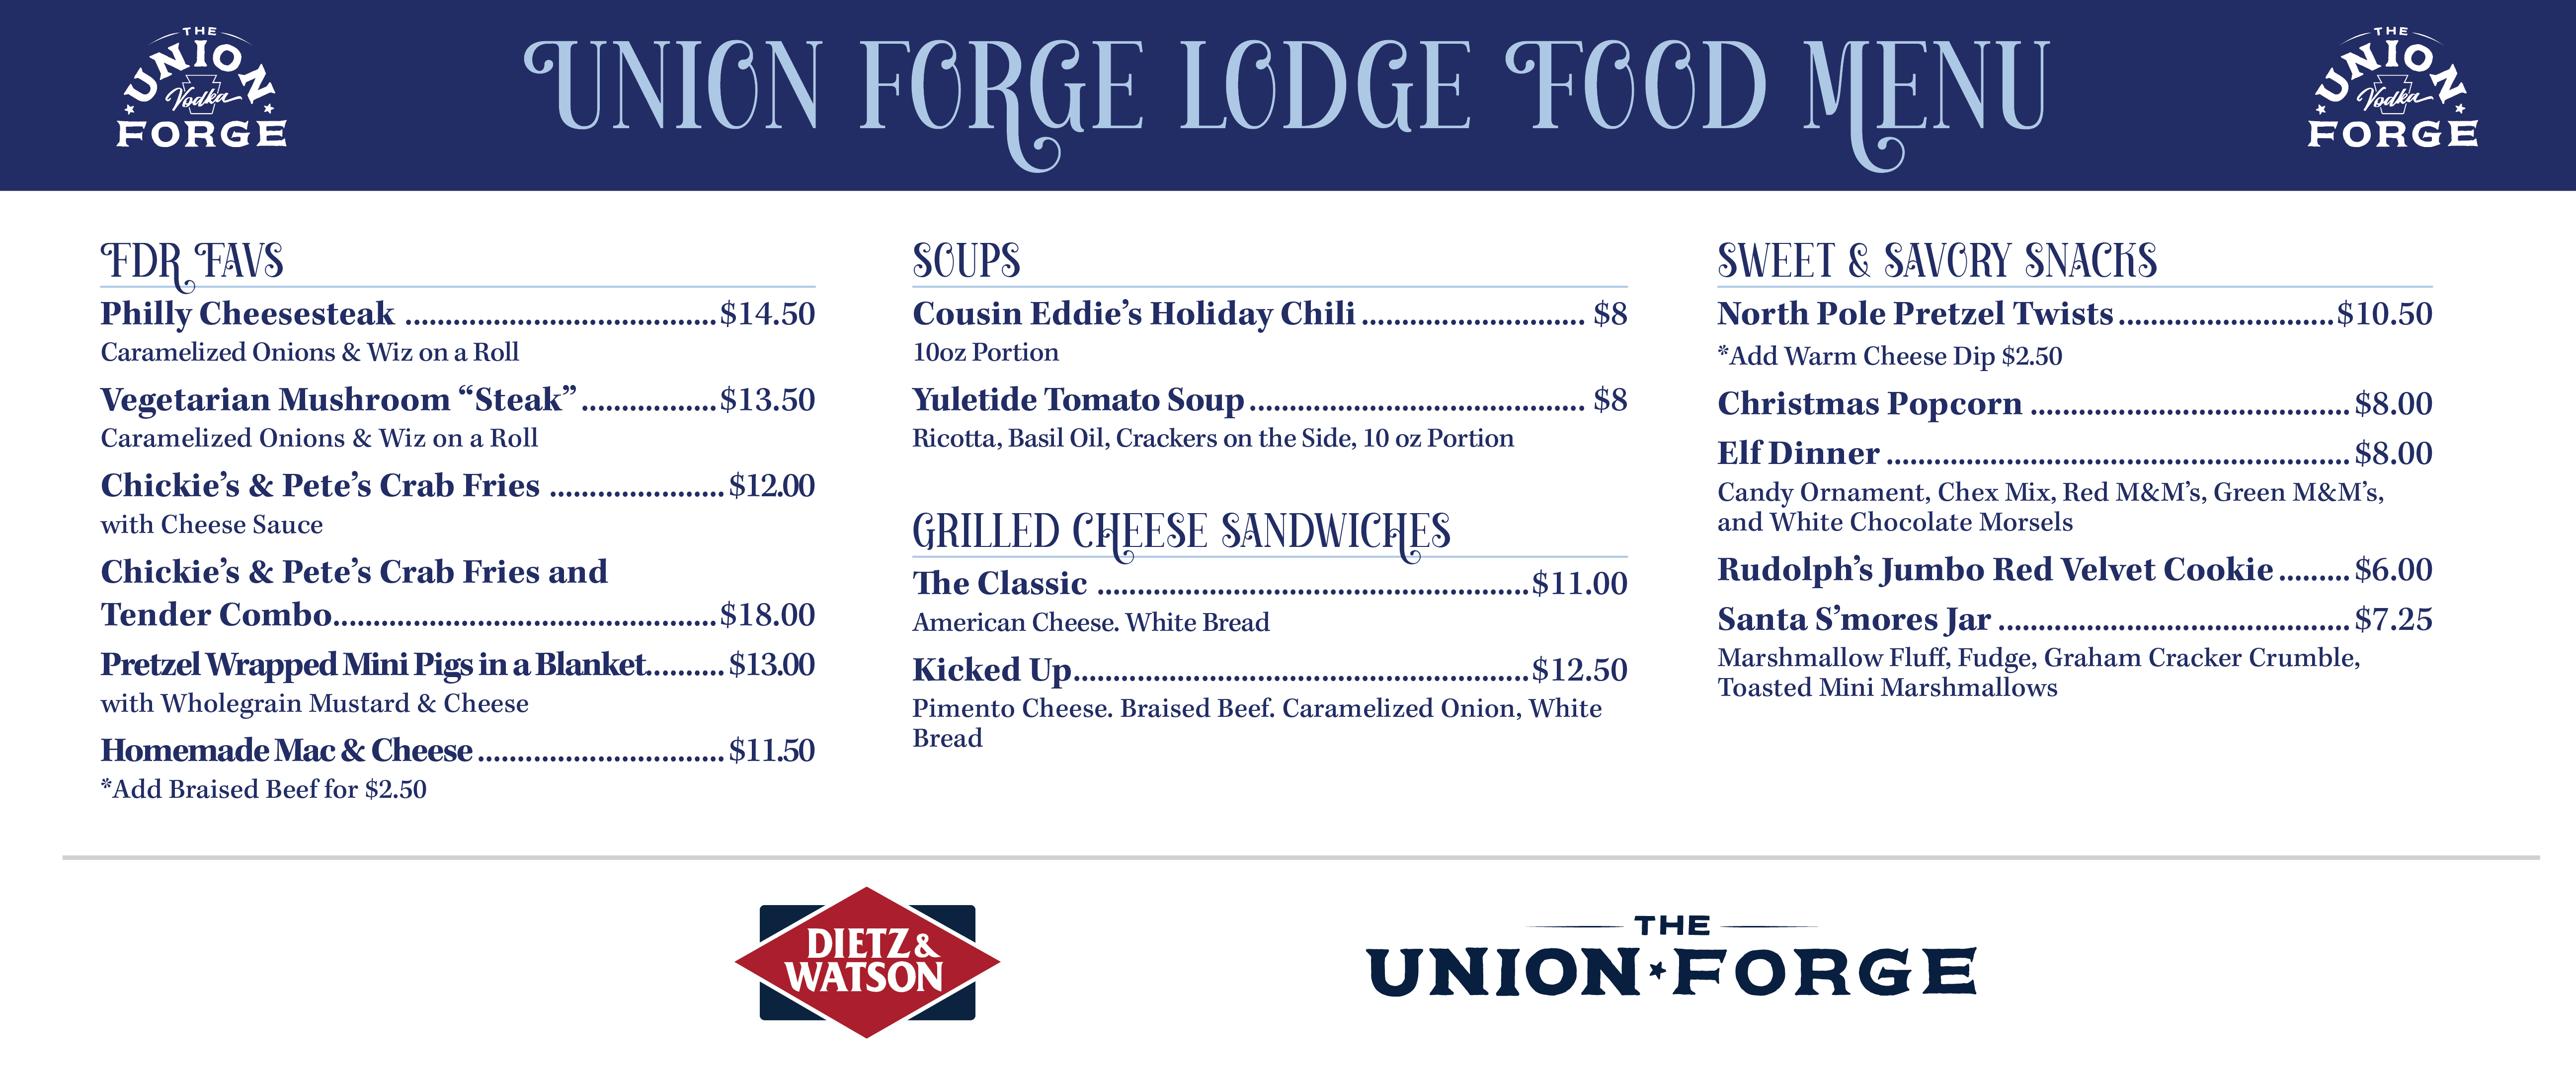 Union Forge Lodge Food Menu 1000.png